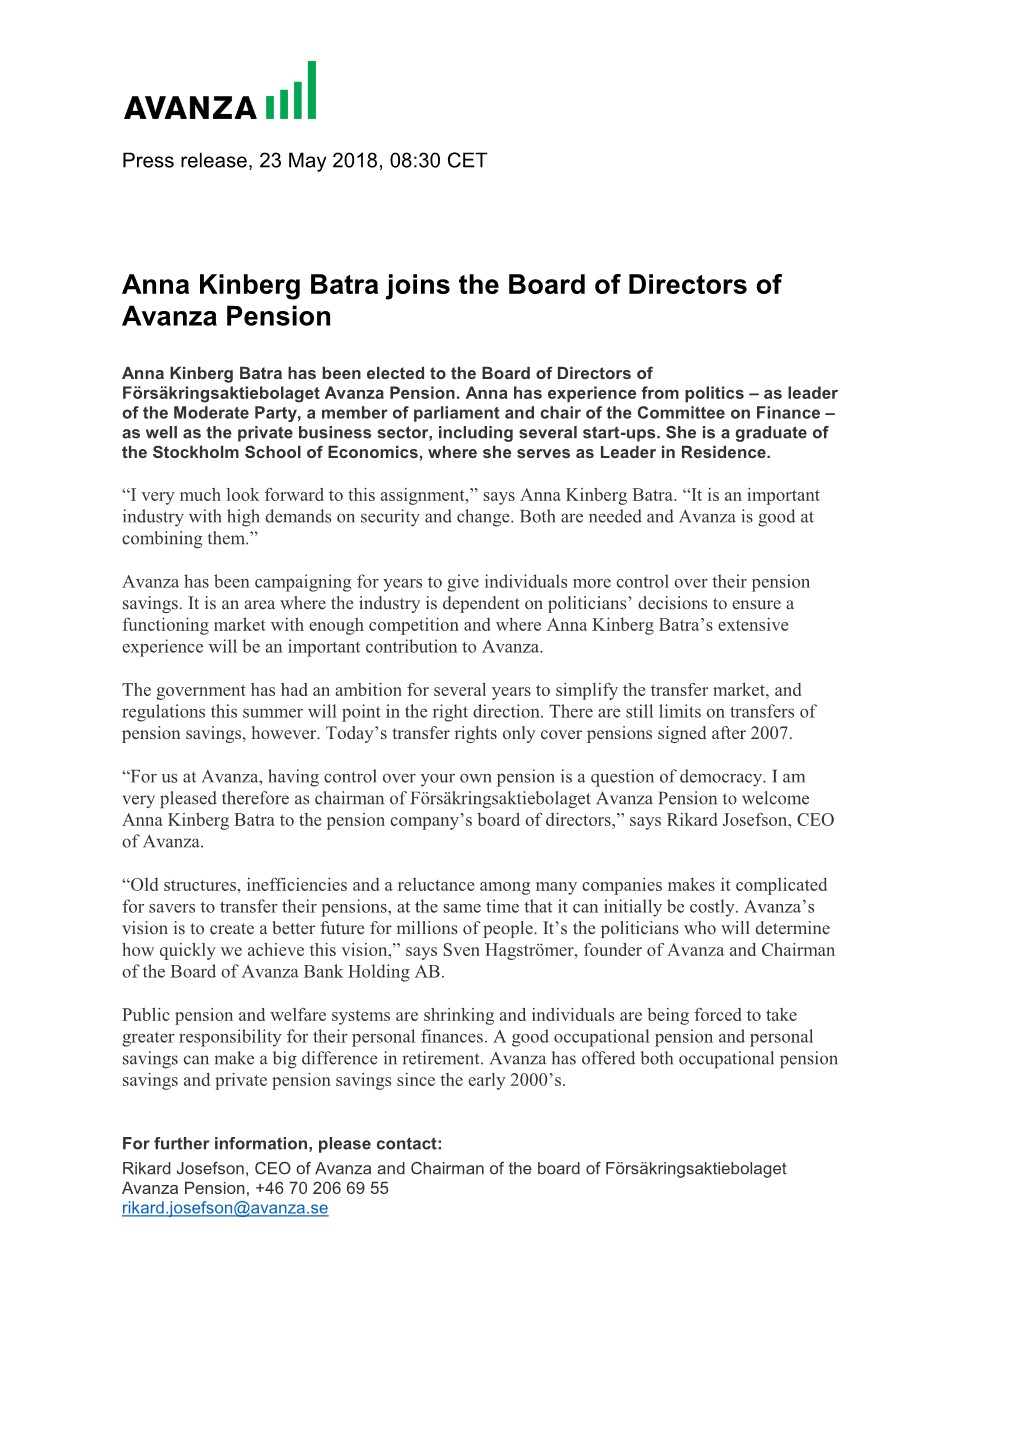 Anna Kinberg Batra Joins the Board of Directors of Avanza Pension